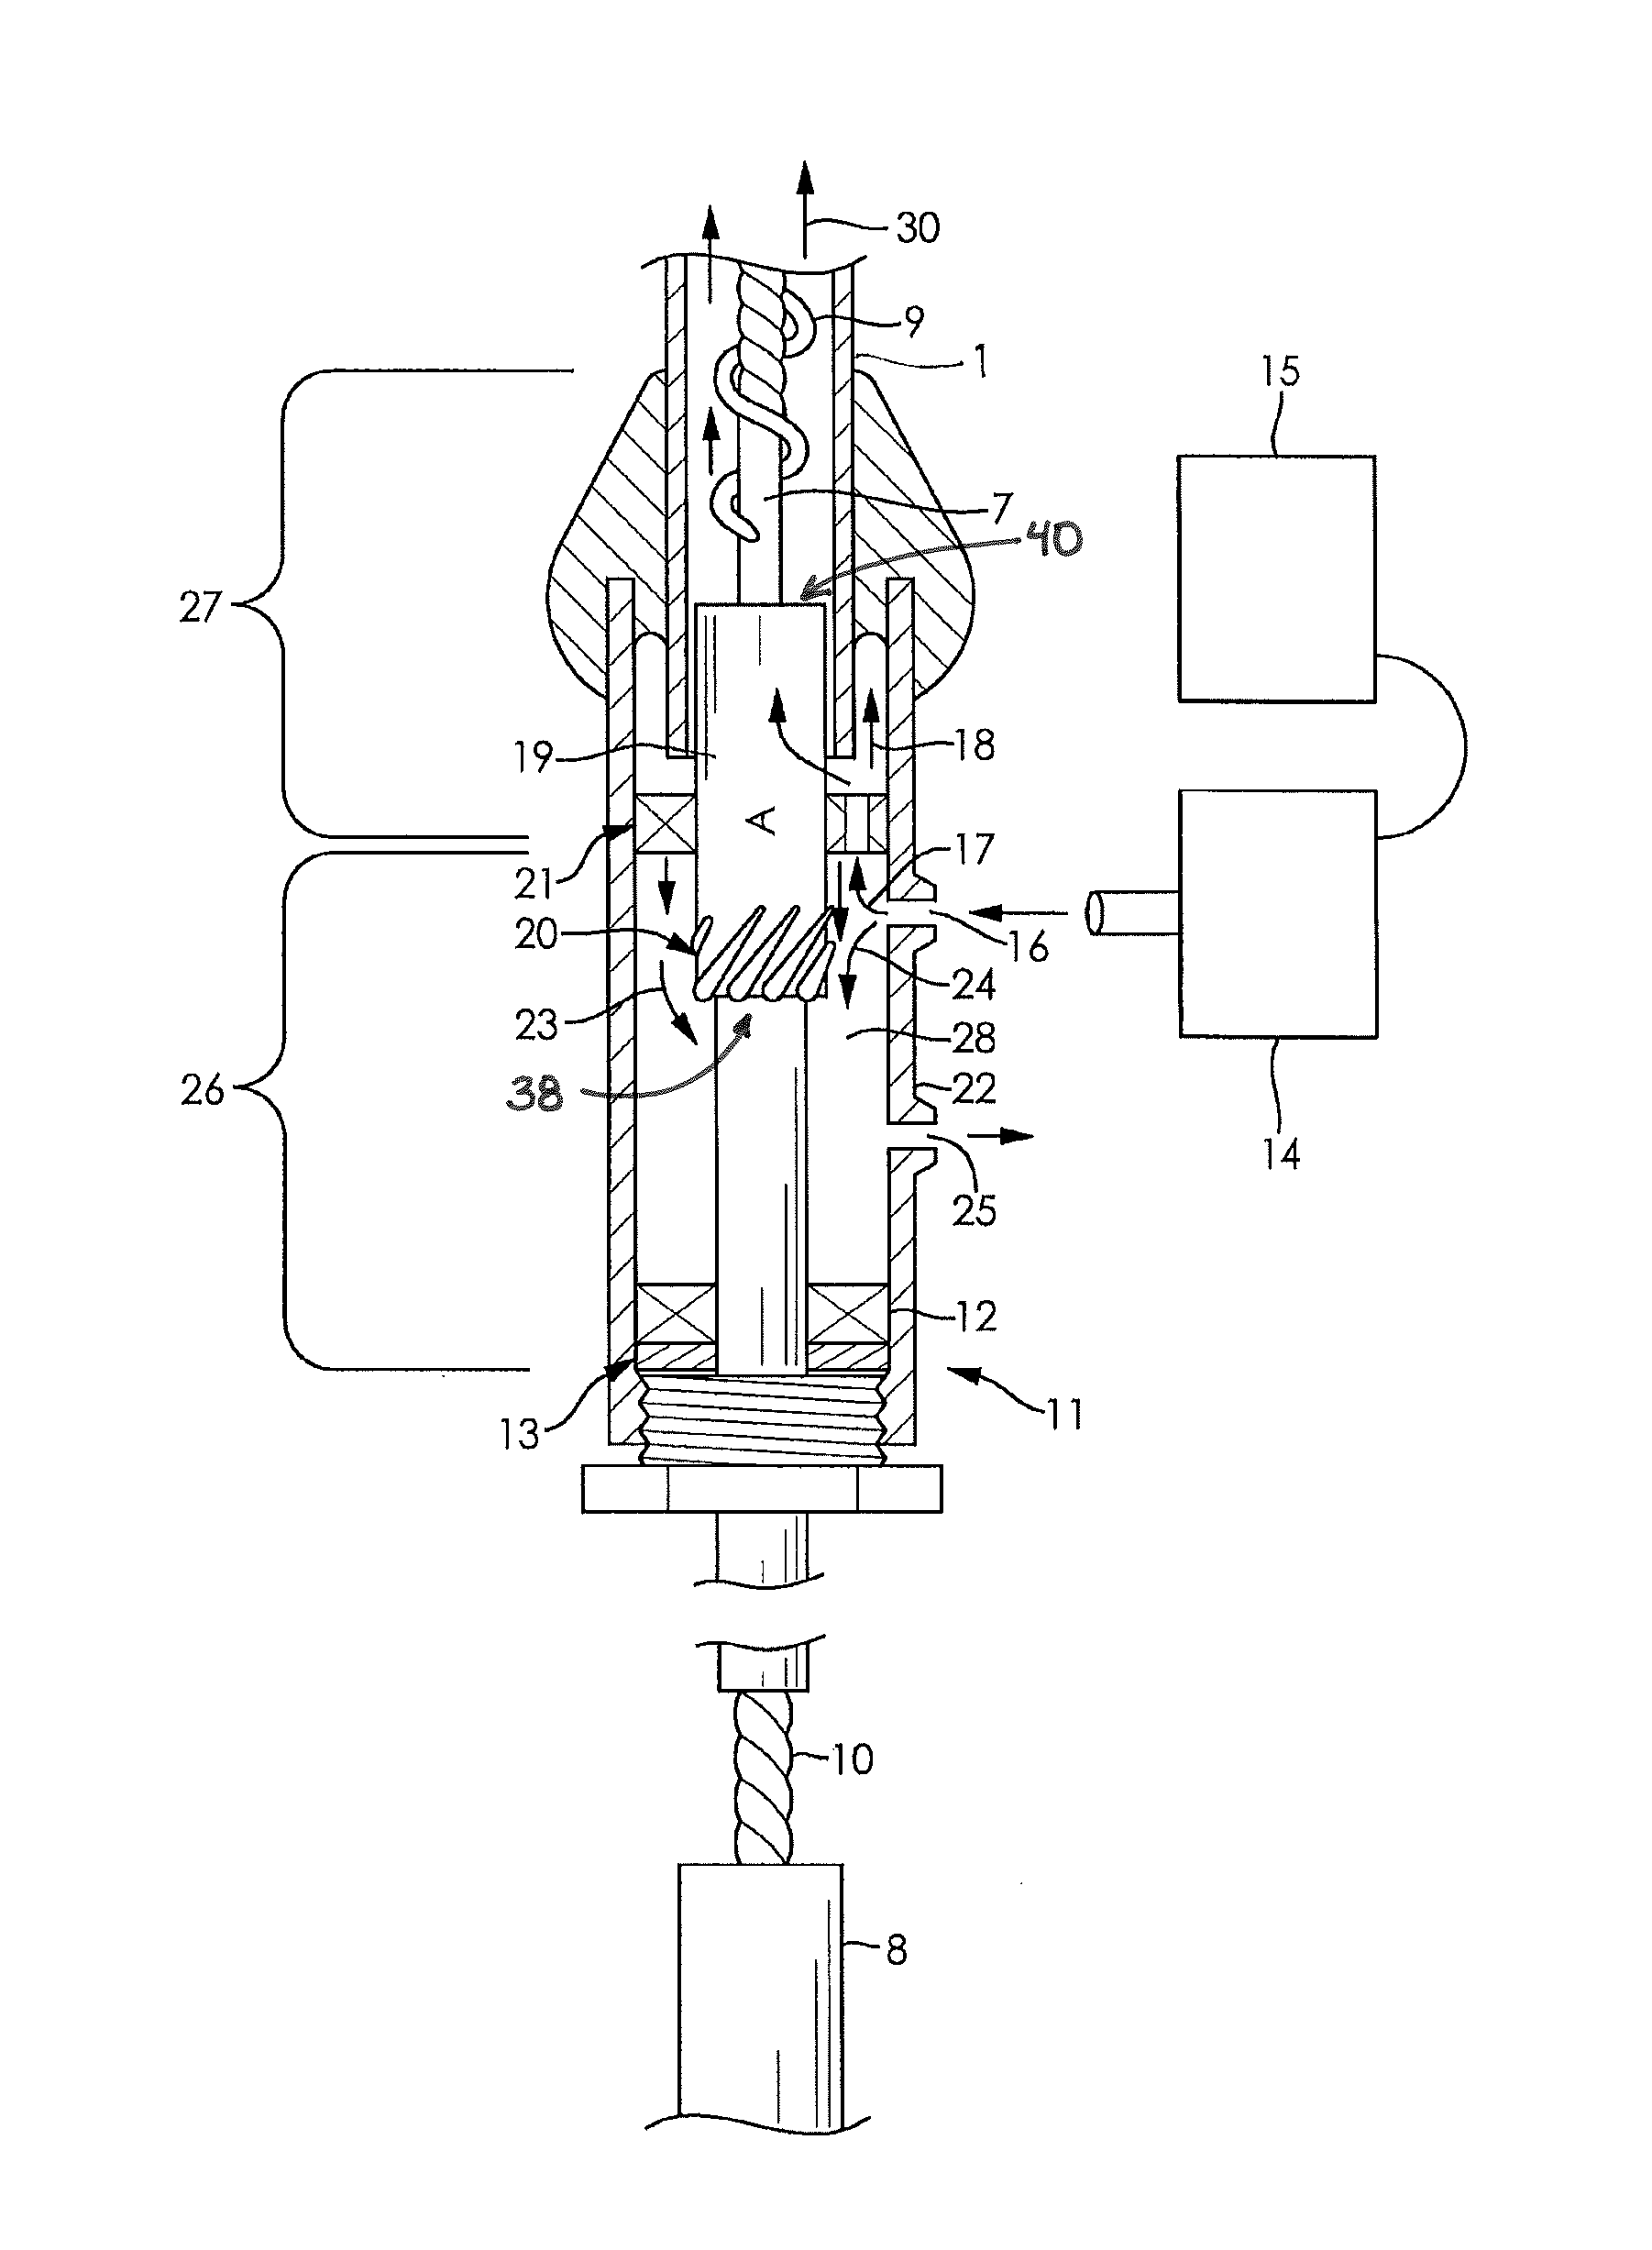 Shaft arrangement having a shaft which extends within a fluid-filled casing